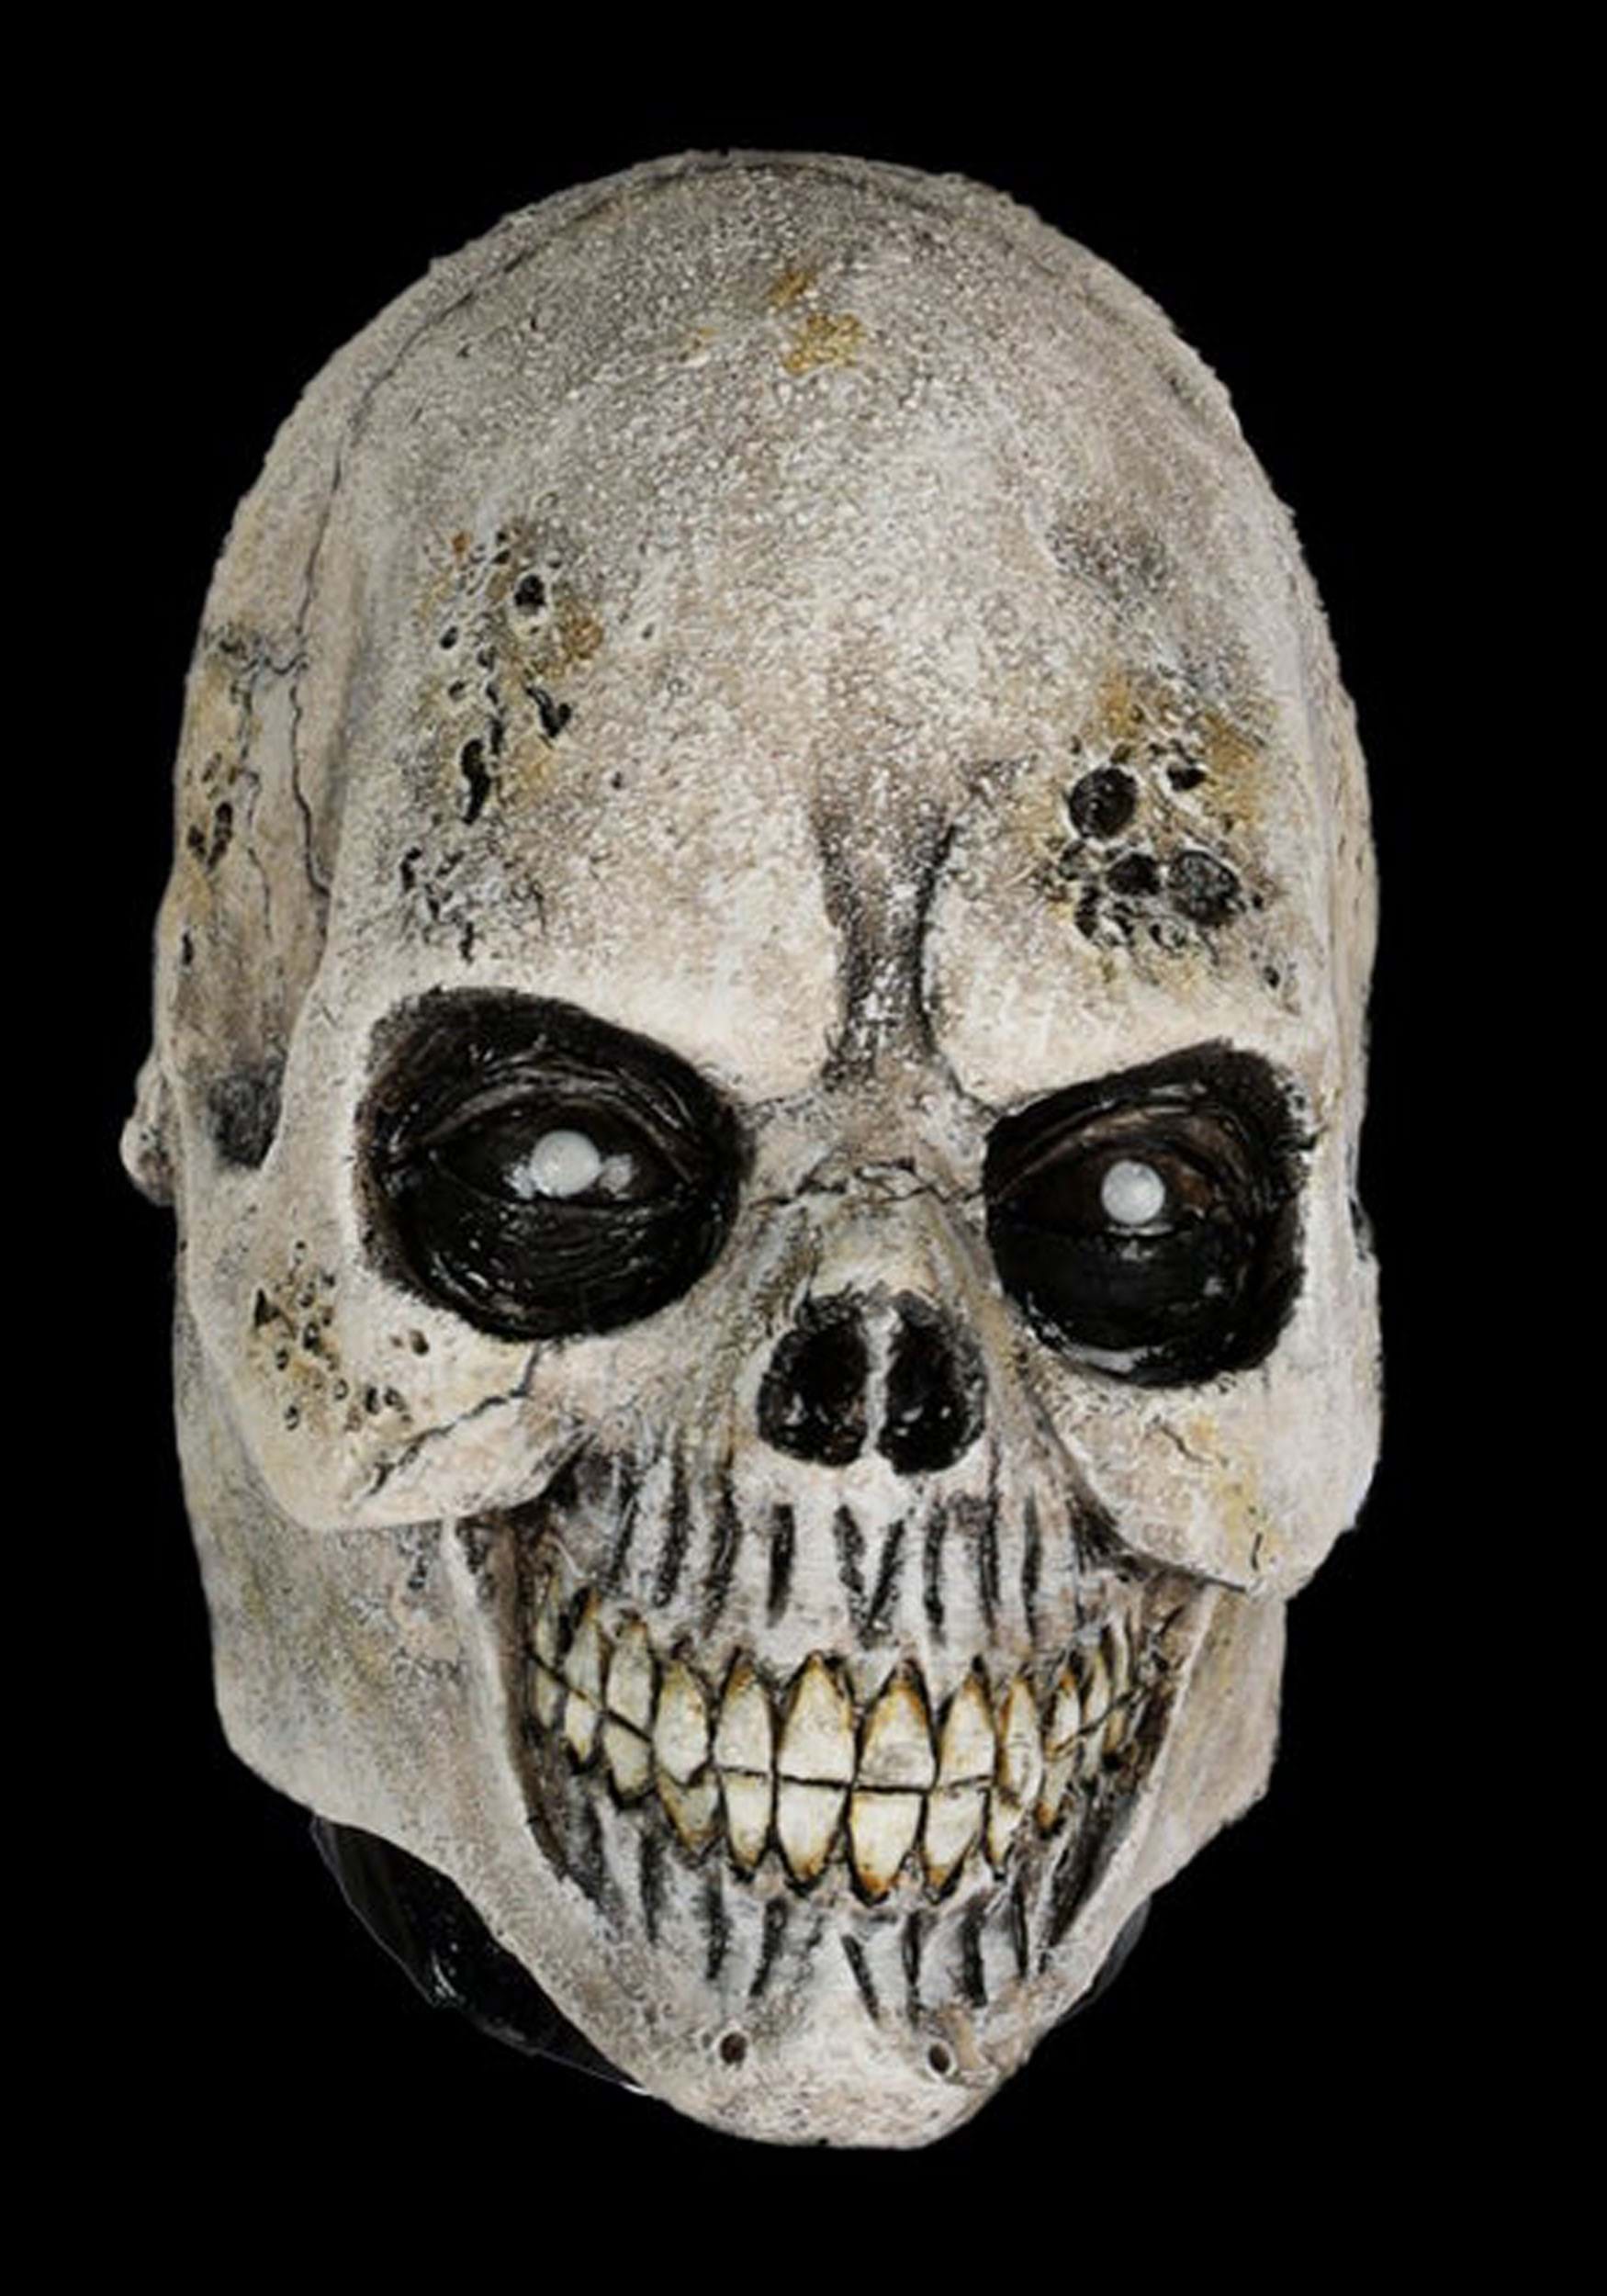 Horror Antic Skull Ornament